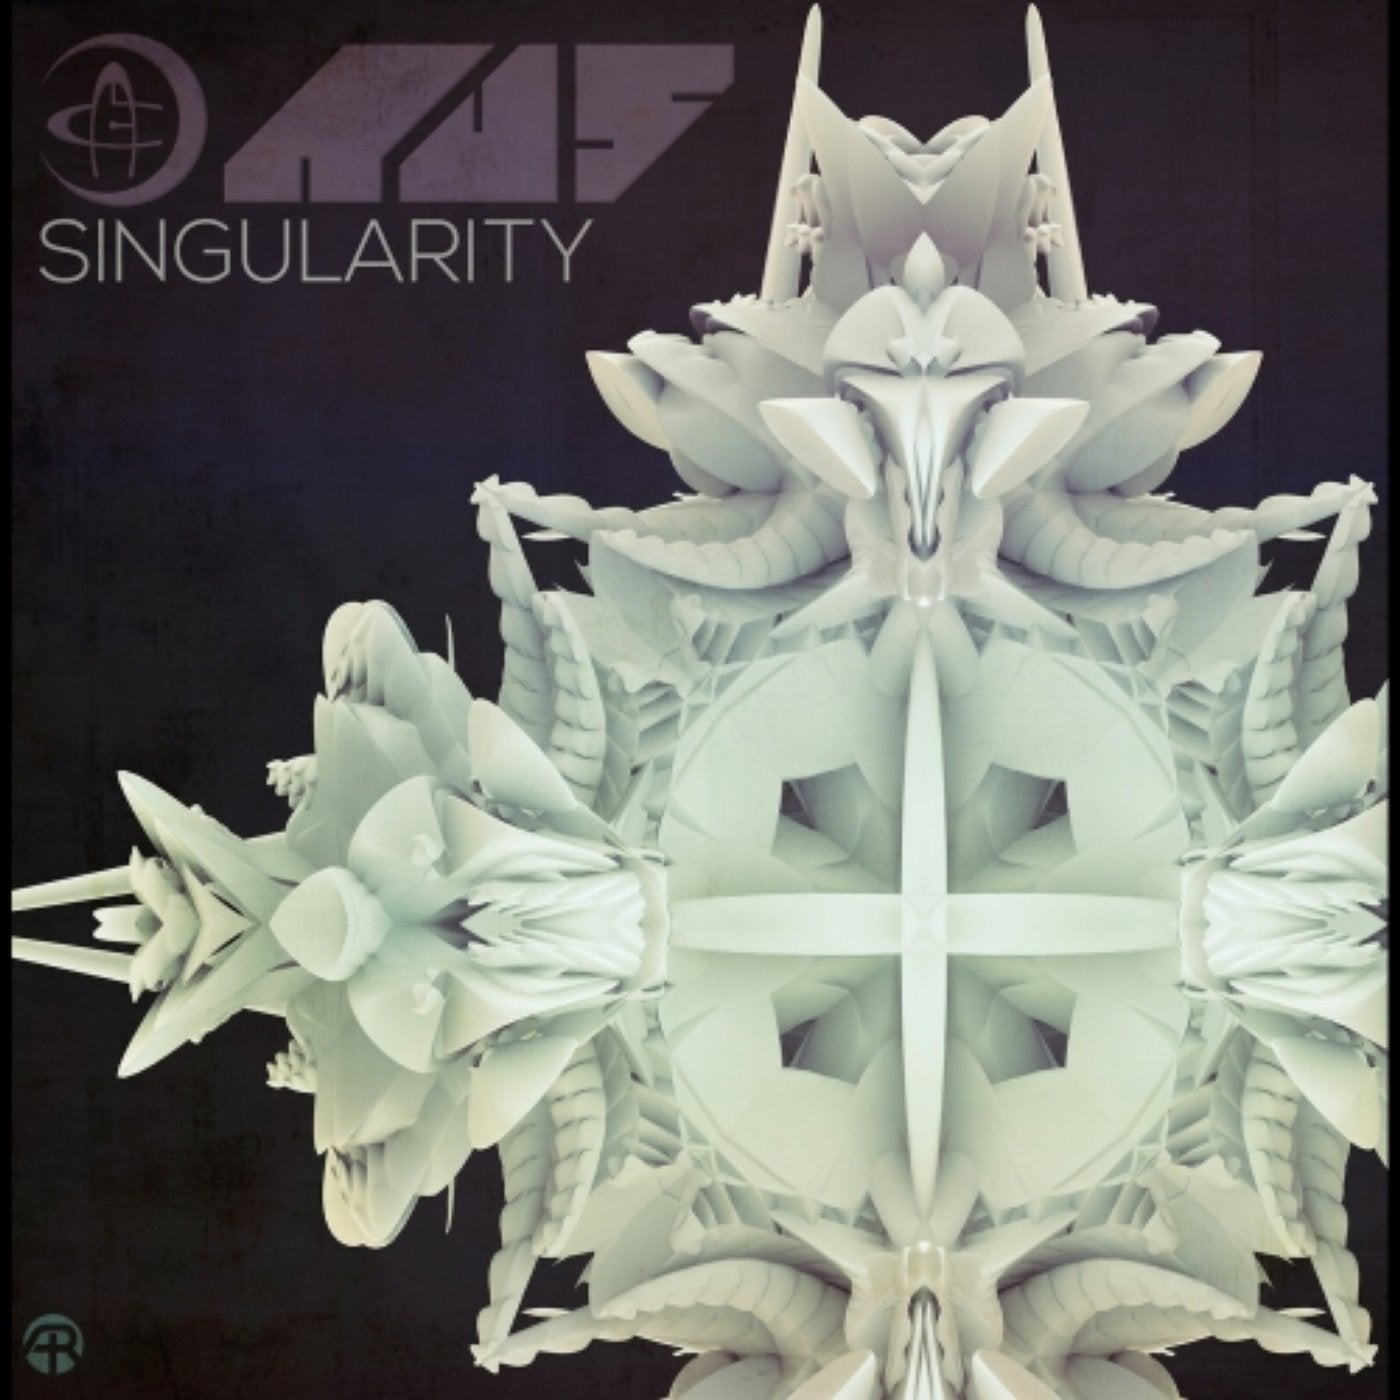 Singularity EP